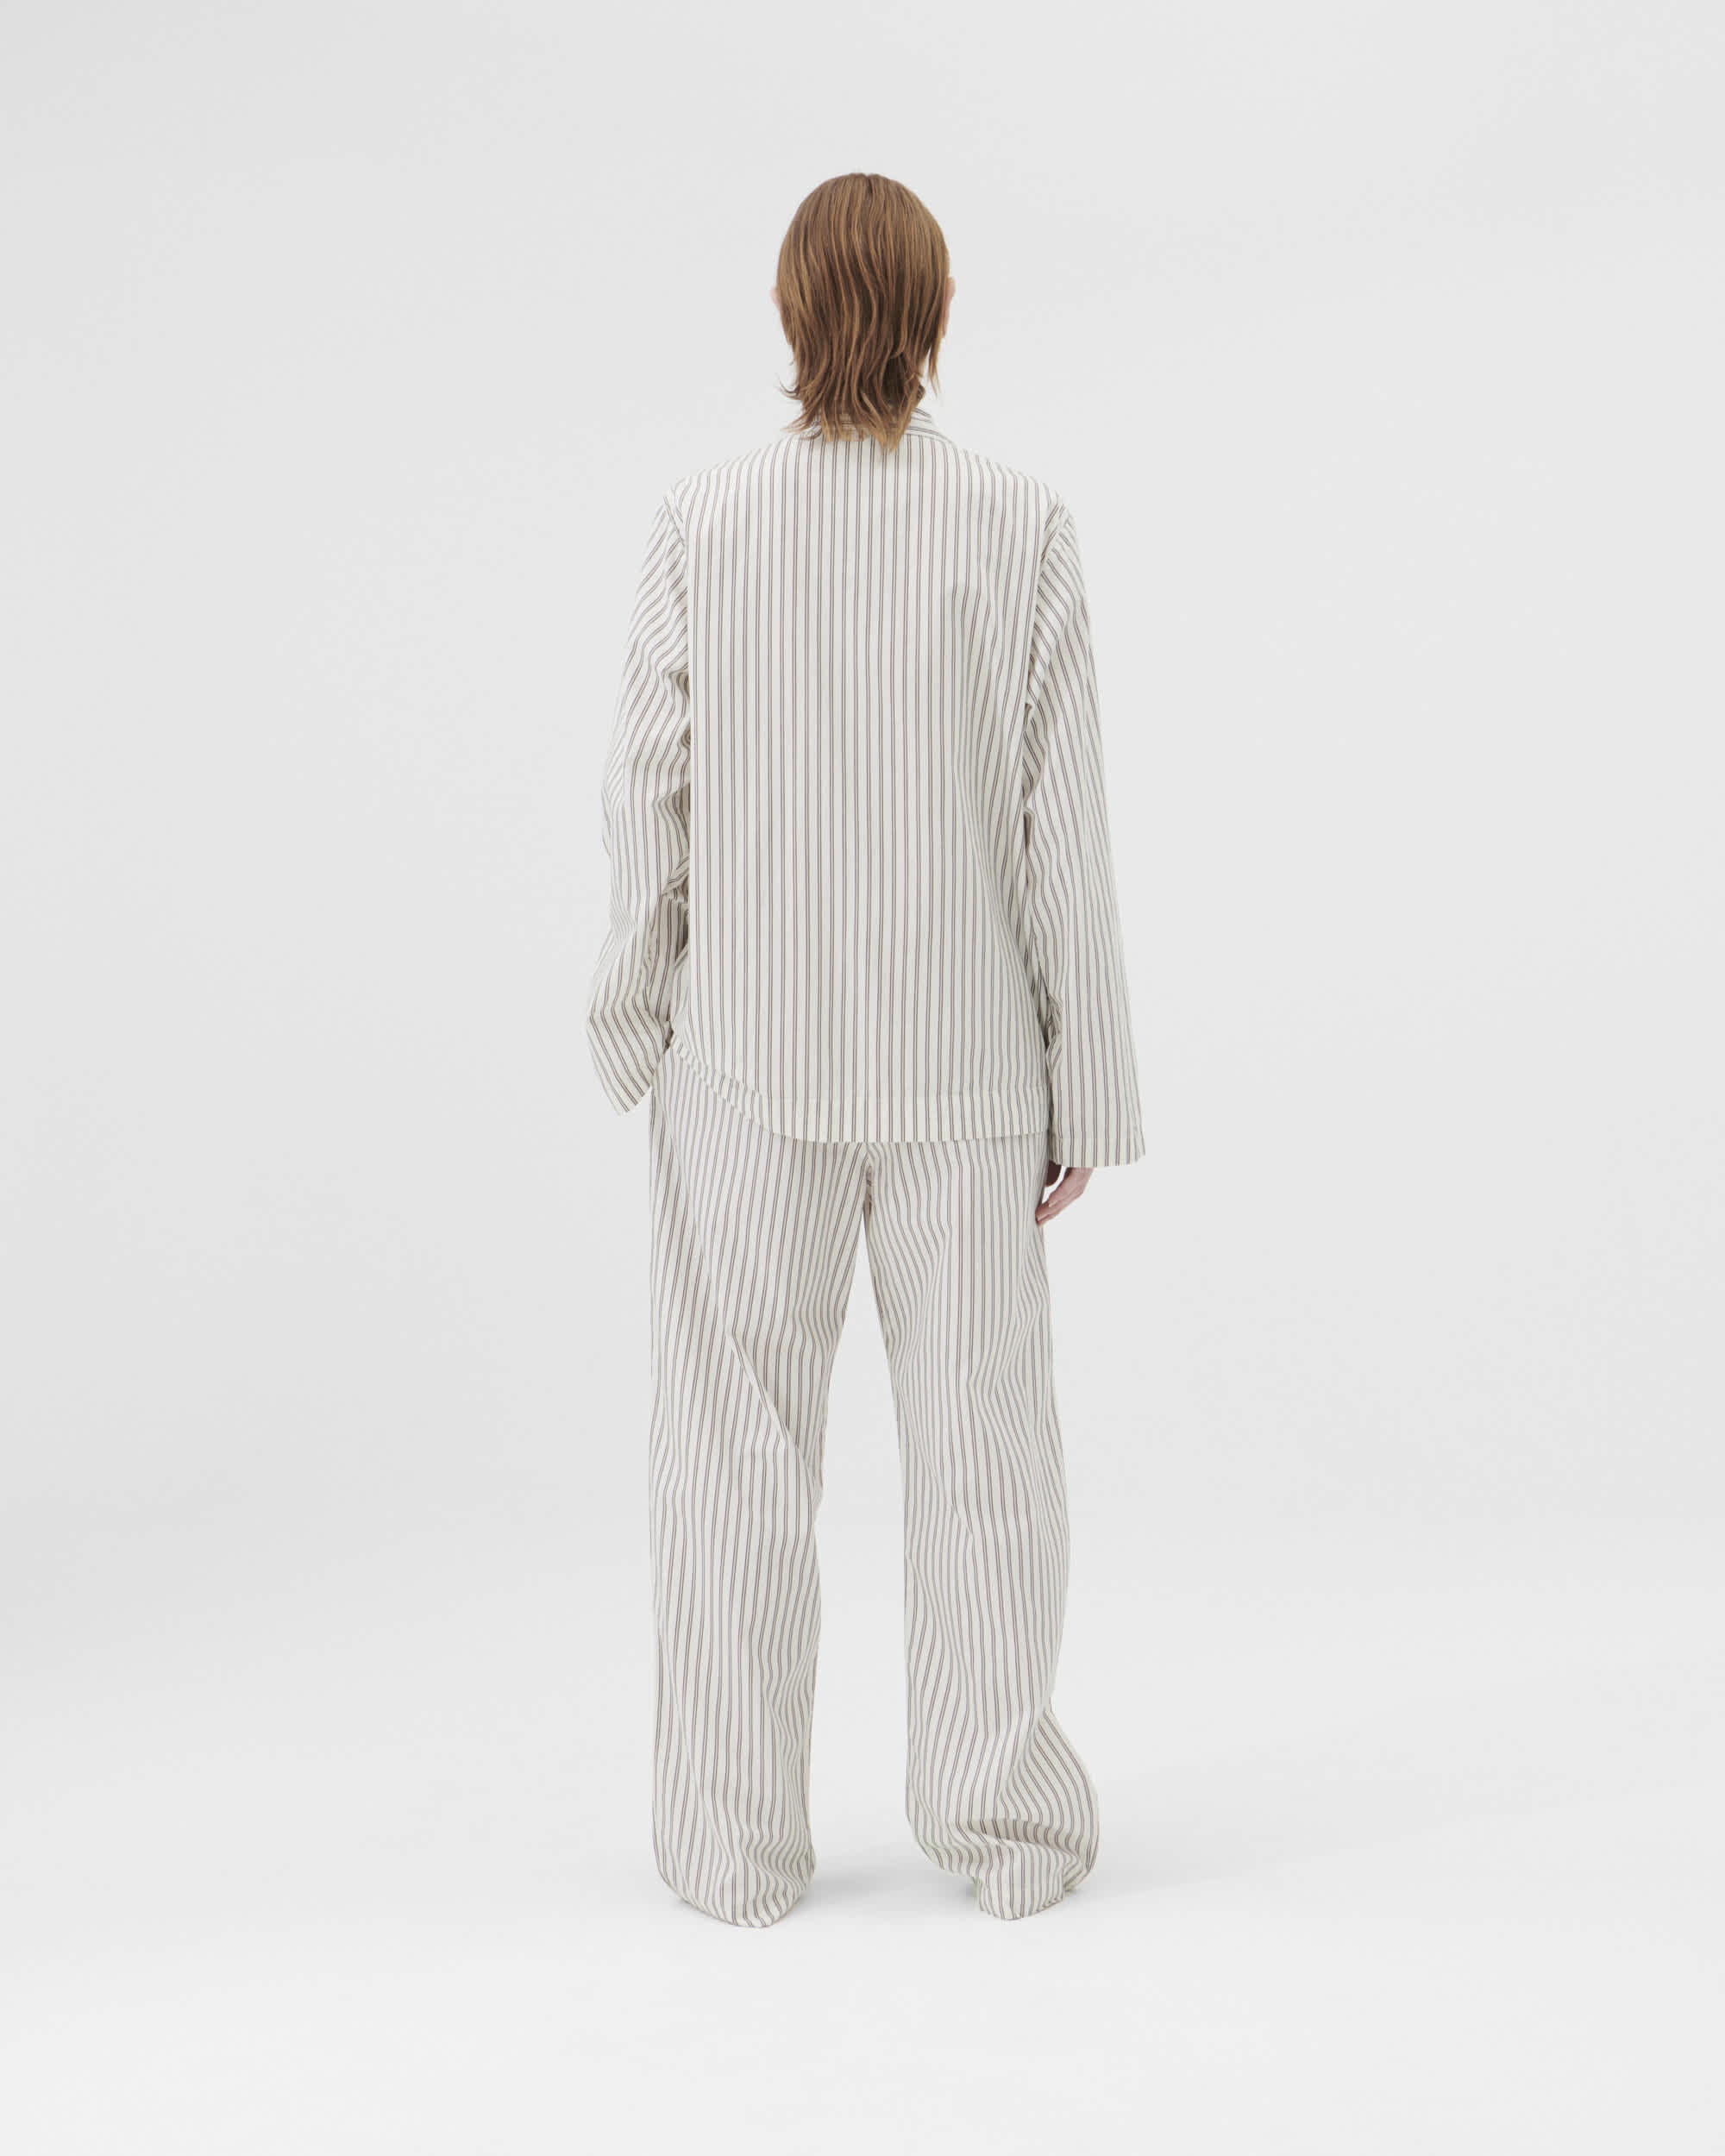 Sleepwear (Poplin) Pyjama Pant - Hopper Stripes